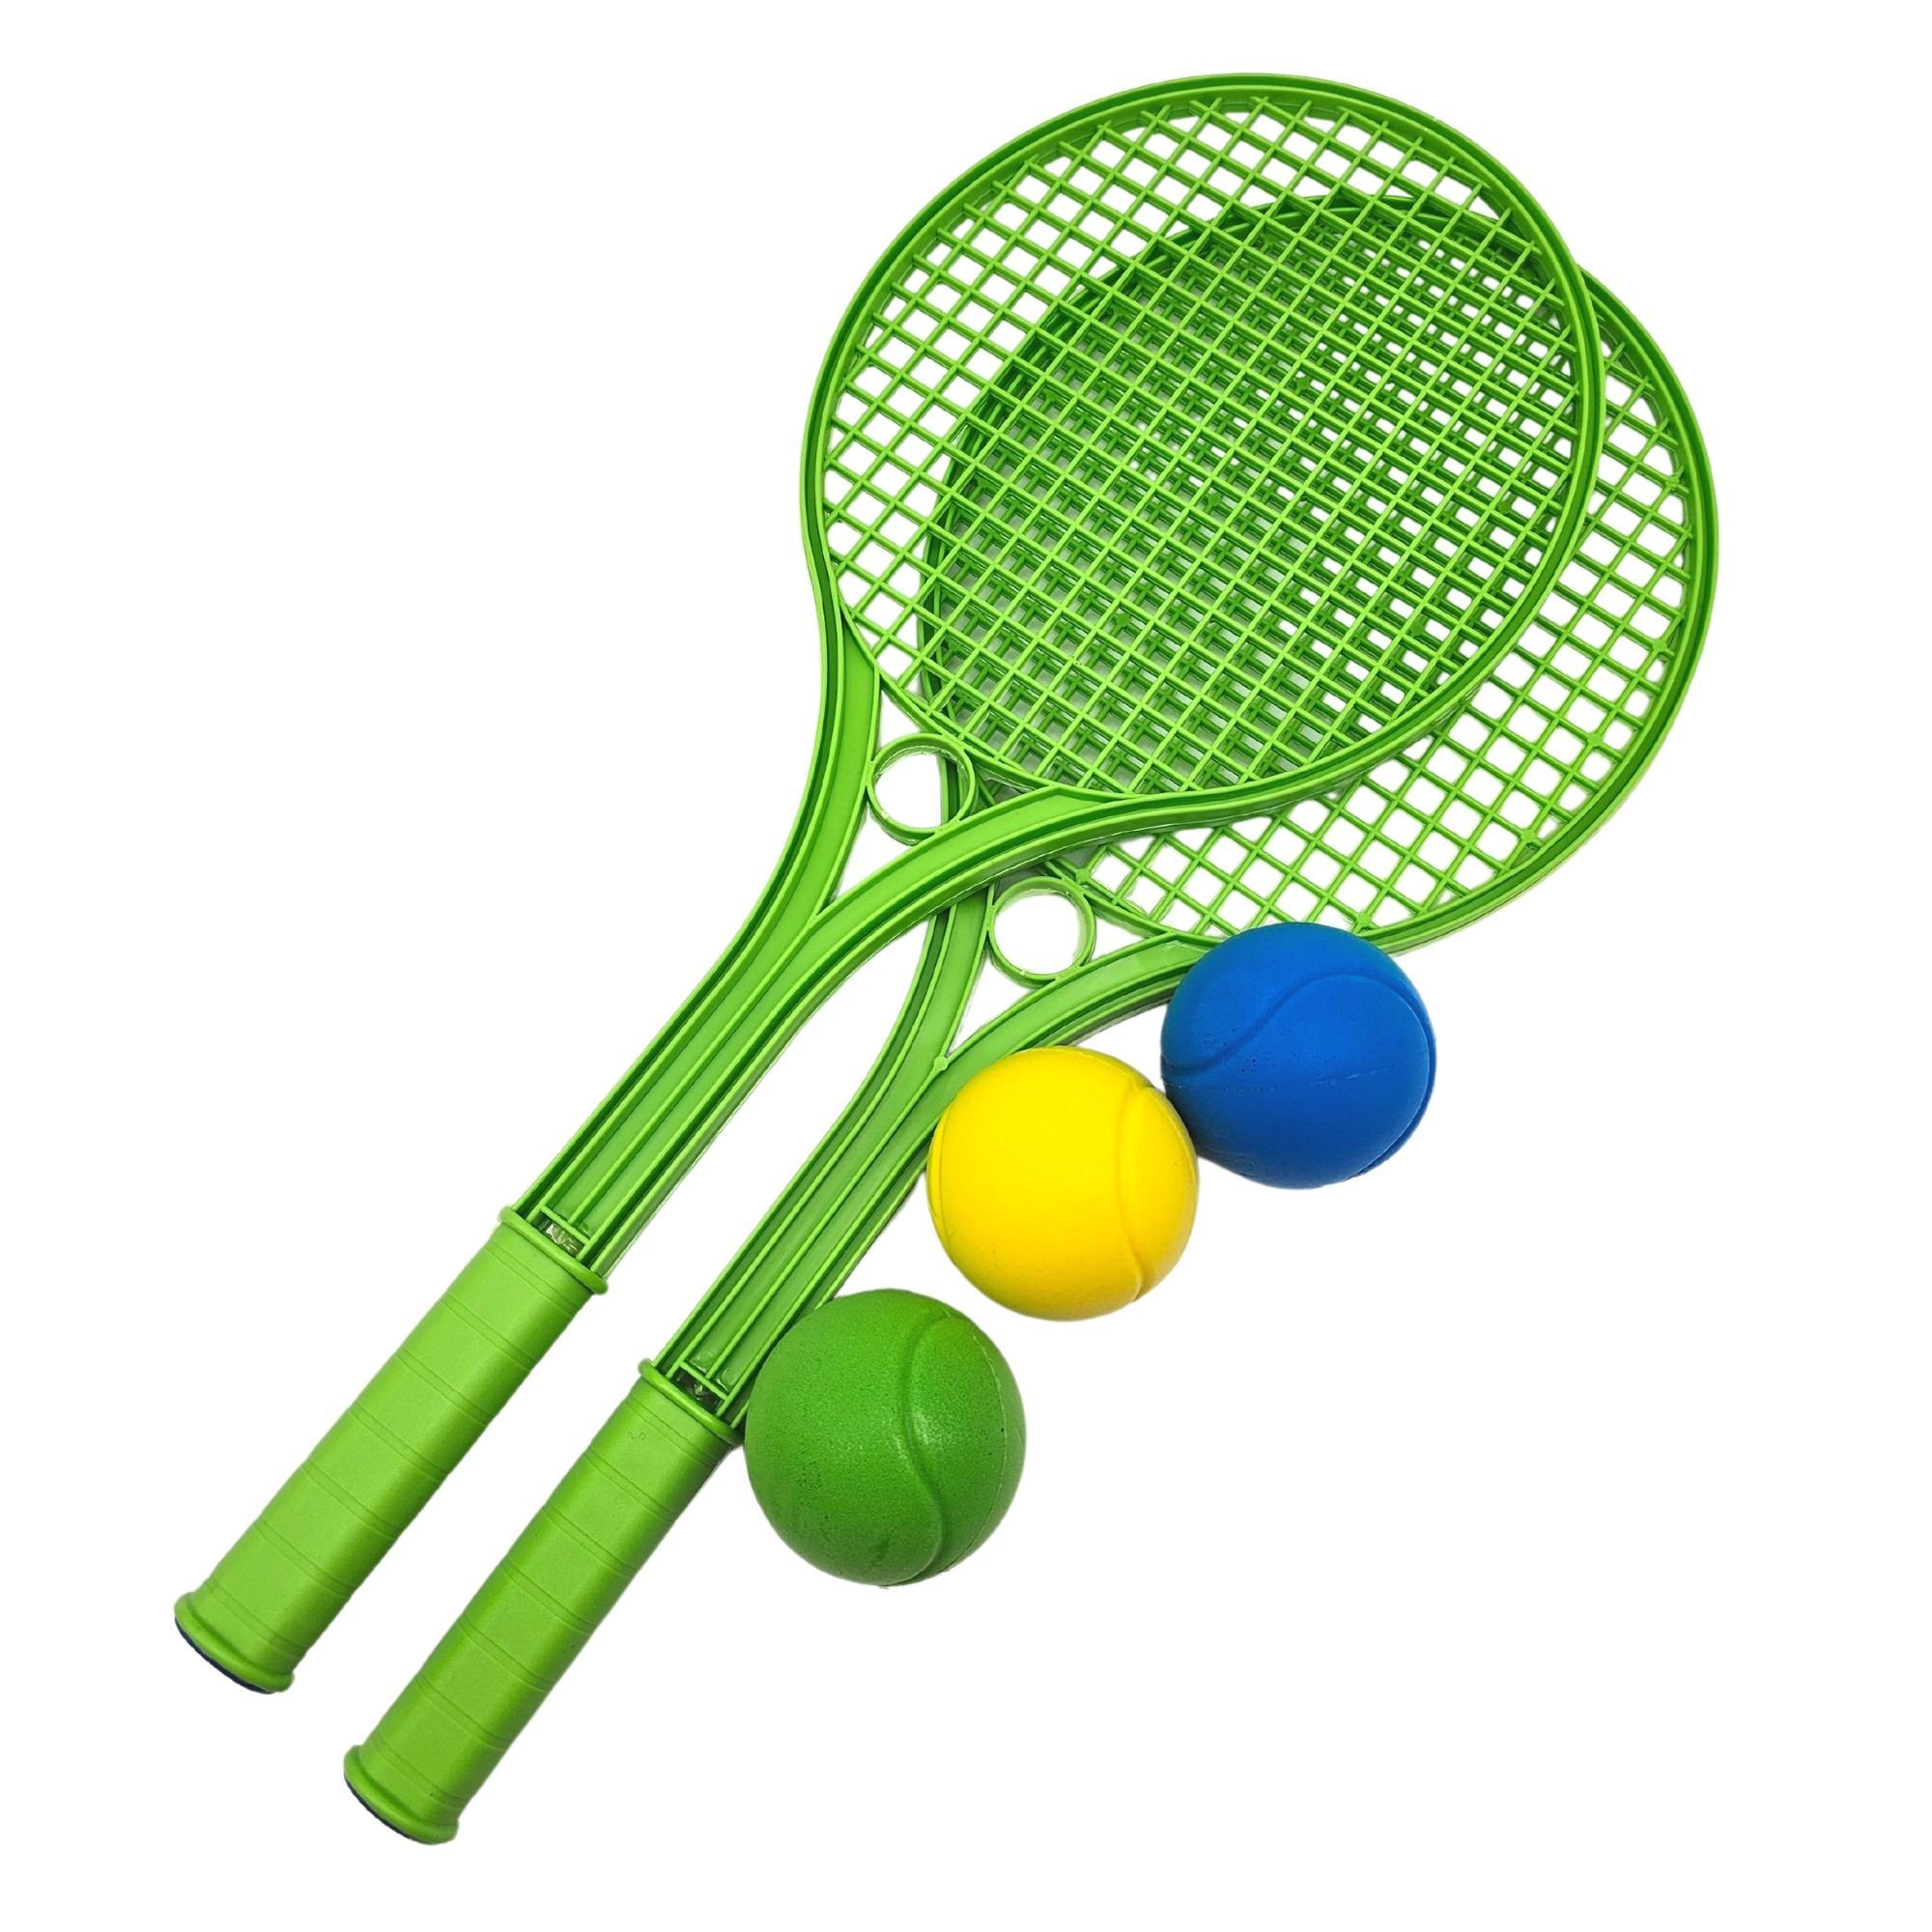 alldoro Tennisschläger 63110, Softball-Tennis für Kinder, 2 grüne Schläger + 3 Softbälle